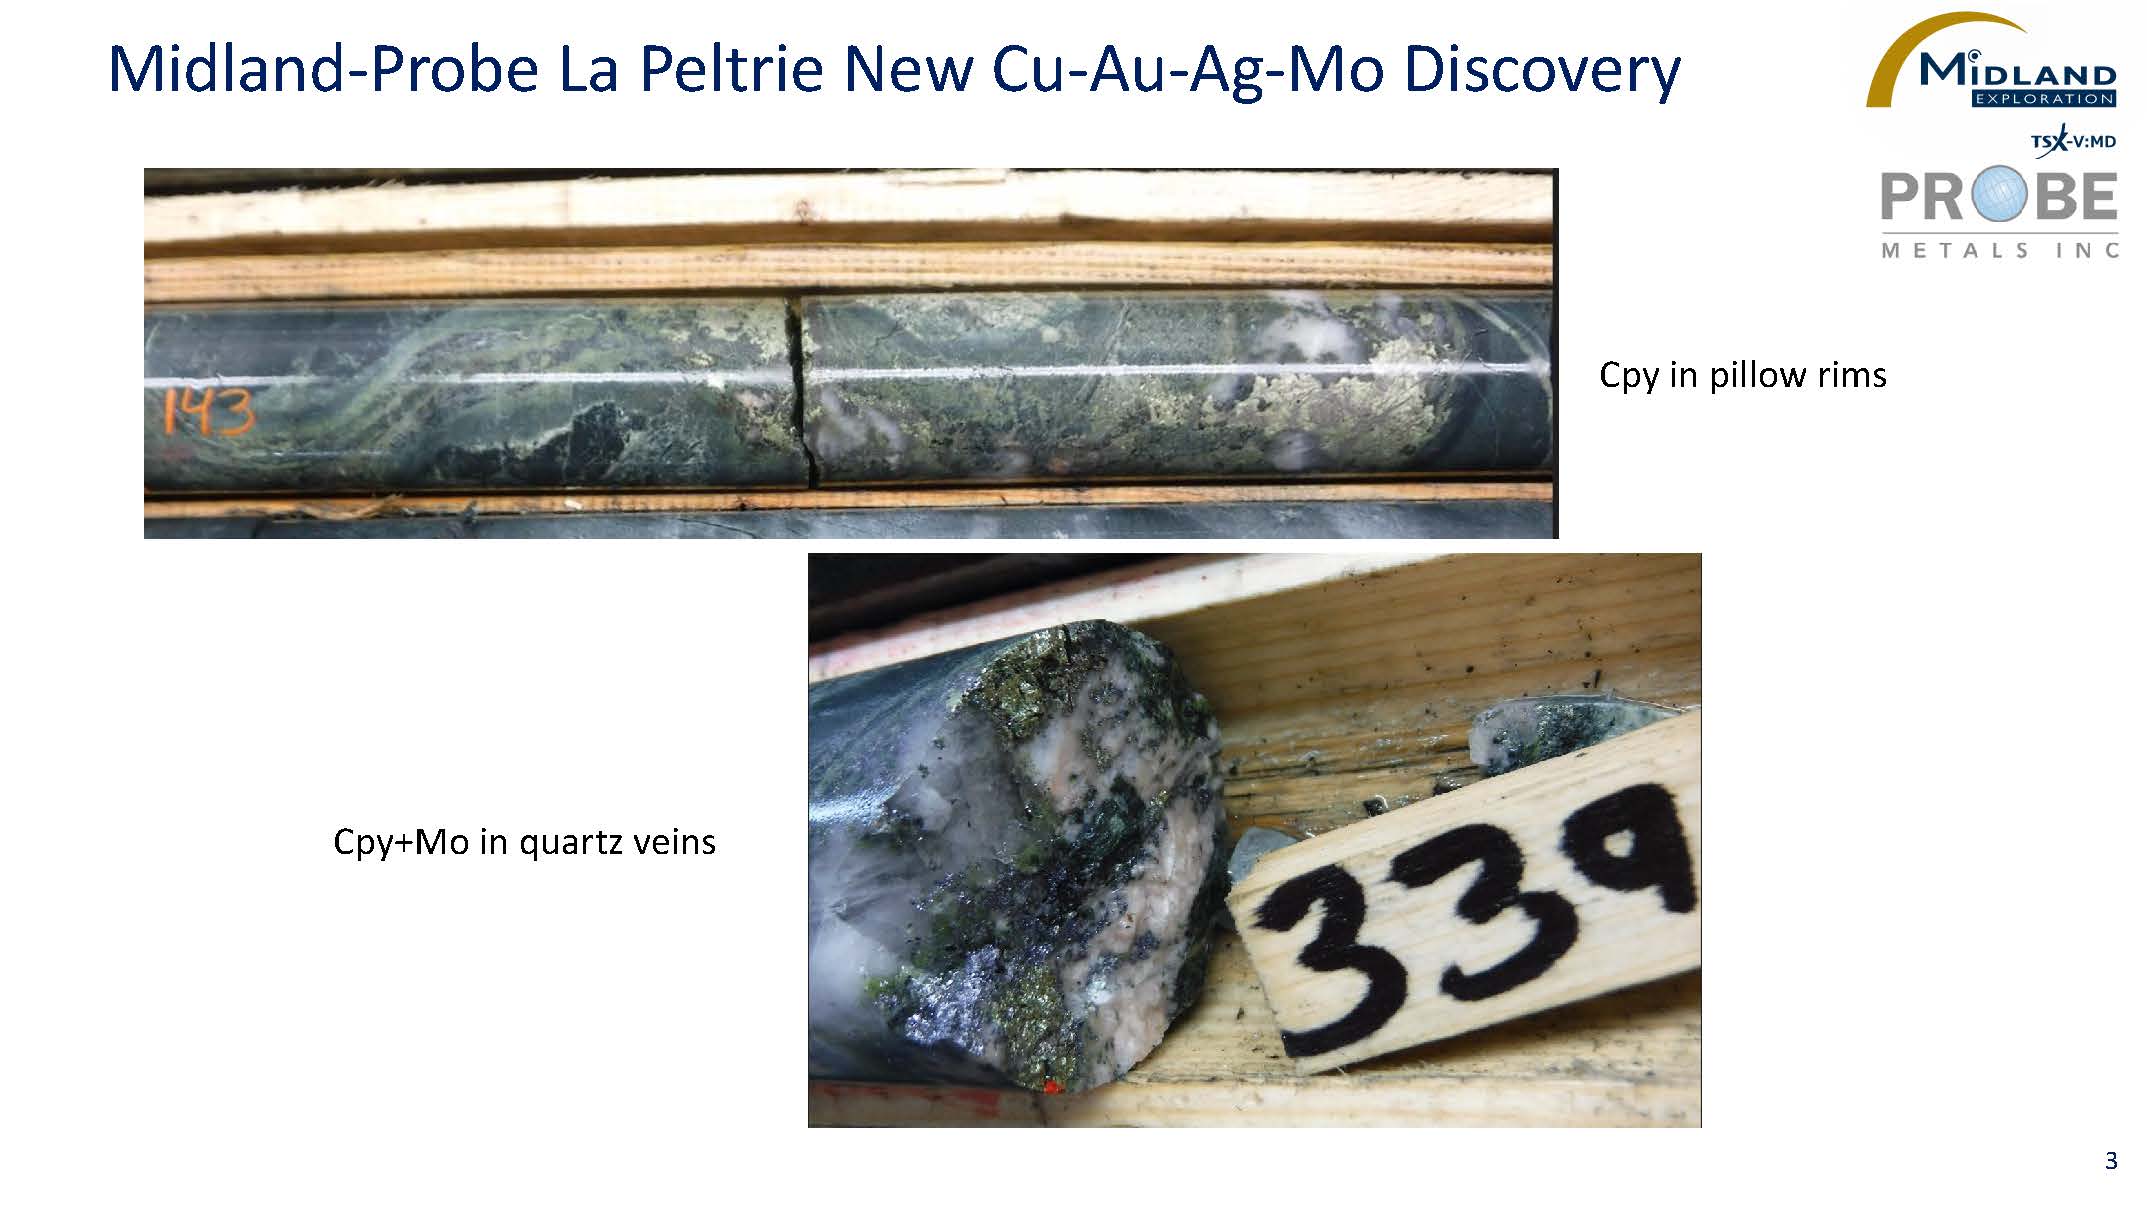 Figure 3 MD-Probe La Peltrie New Cu-Au-Ag-Mo Discovery